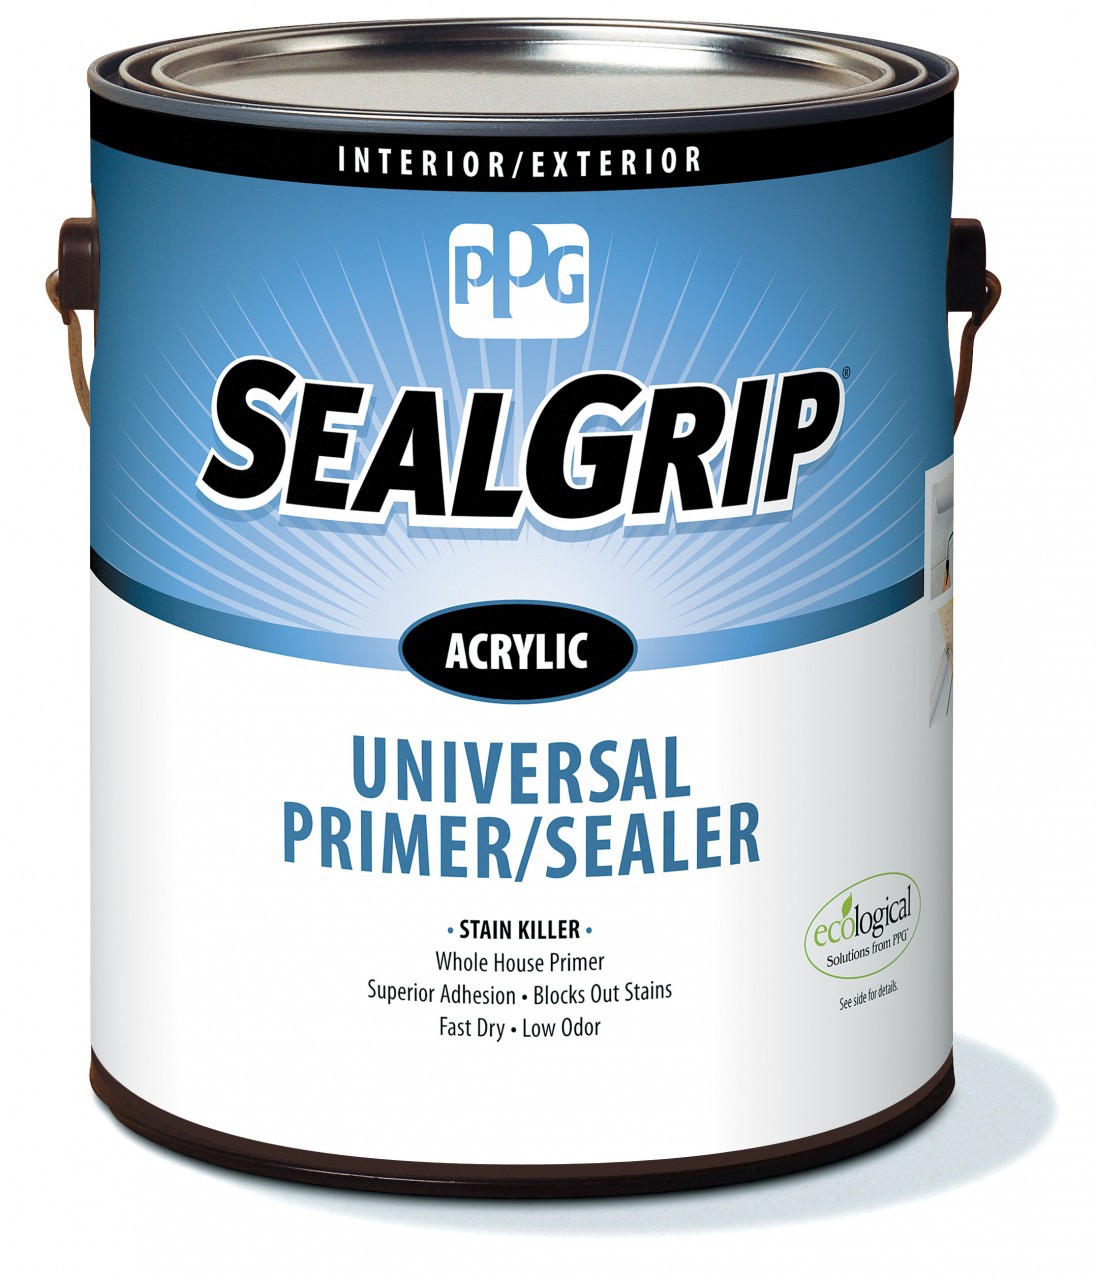 Ppg Seal Grip Interior Exterior Acrylic Universal Primer Sealer